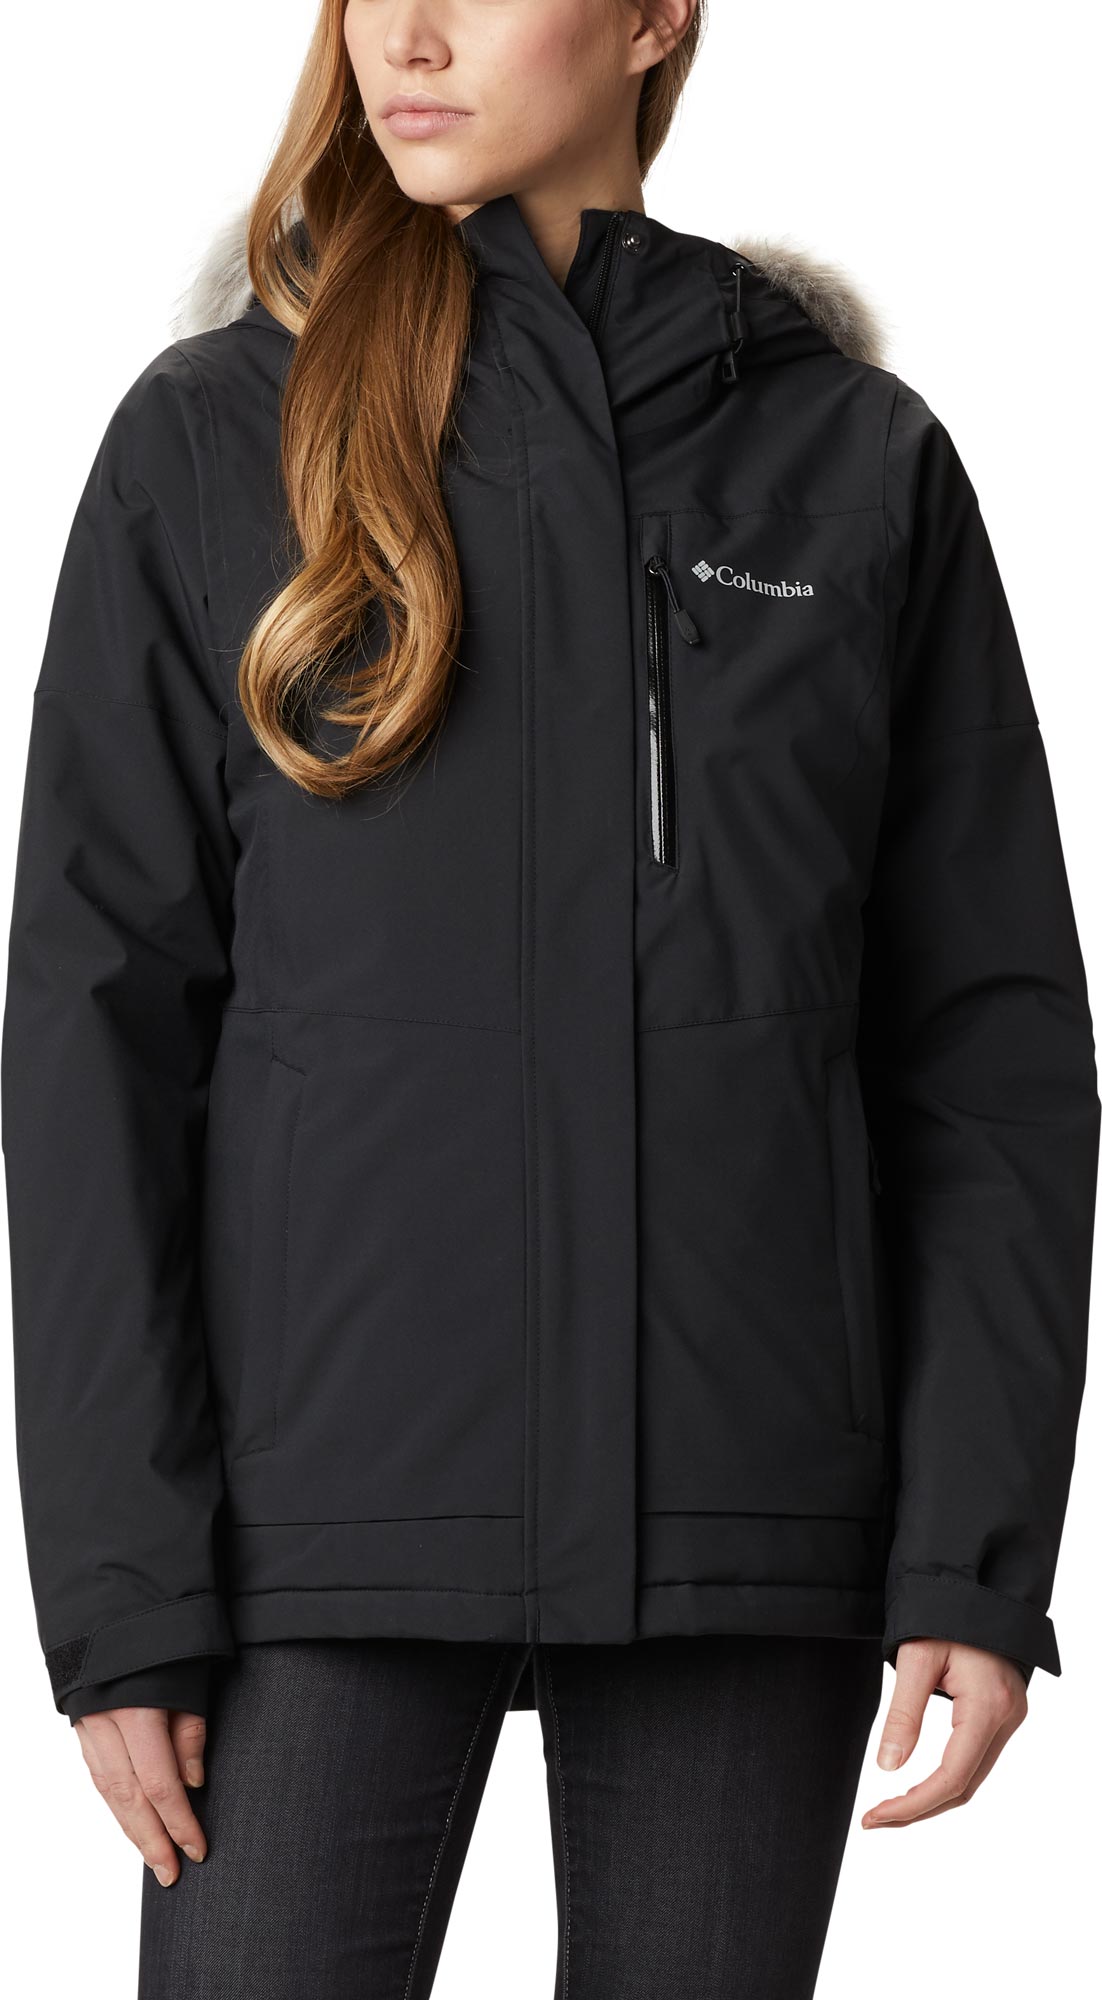 Women’s insulated ski jacket